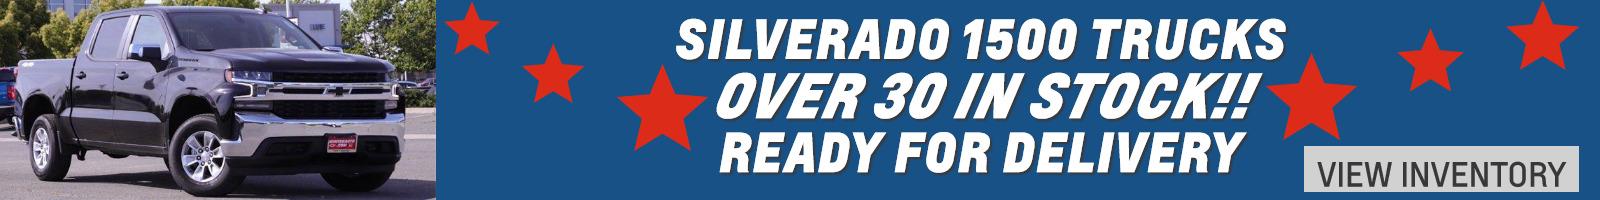 SILVERADO 1500 OVER 30 IN STOCK READY FOR DELIVERY.